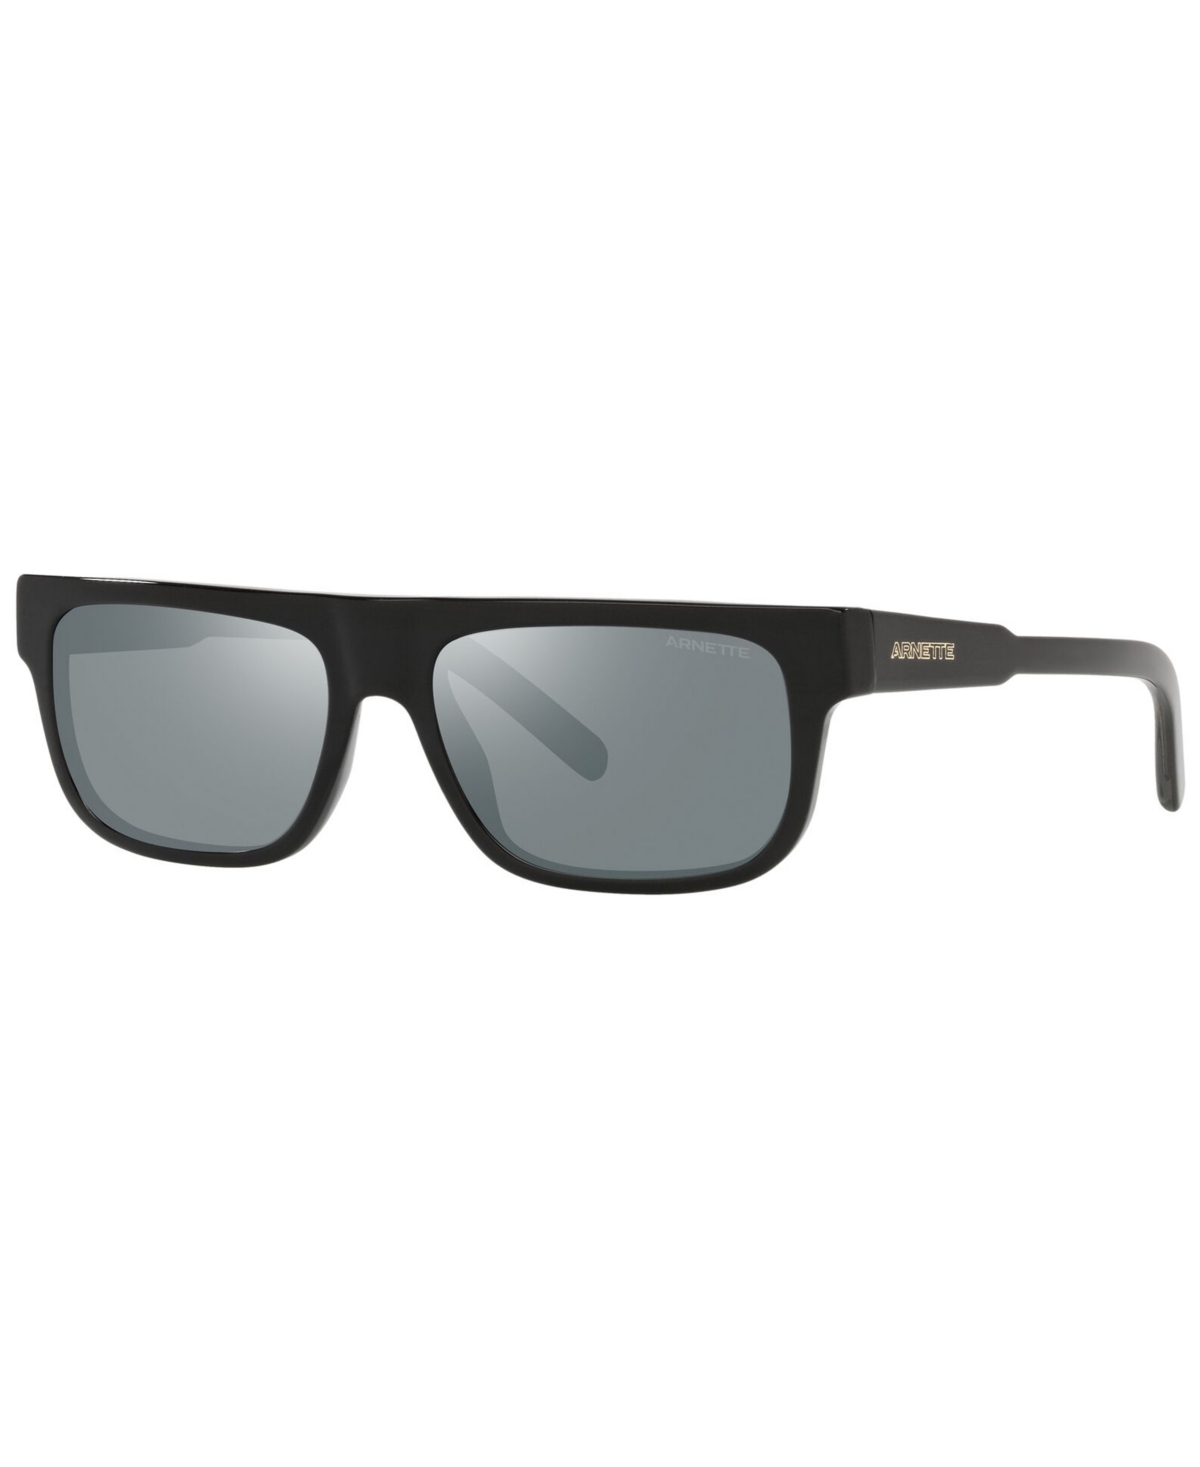 Sunglasses, AN4278 55 - BLACK/GREY MIRROR BLACK